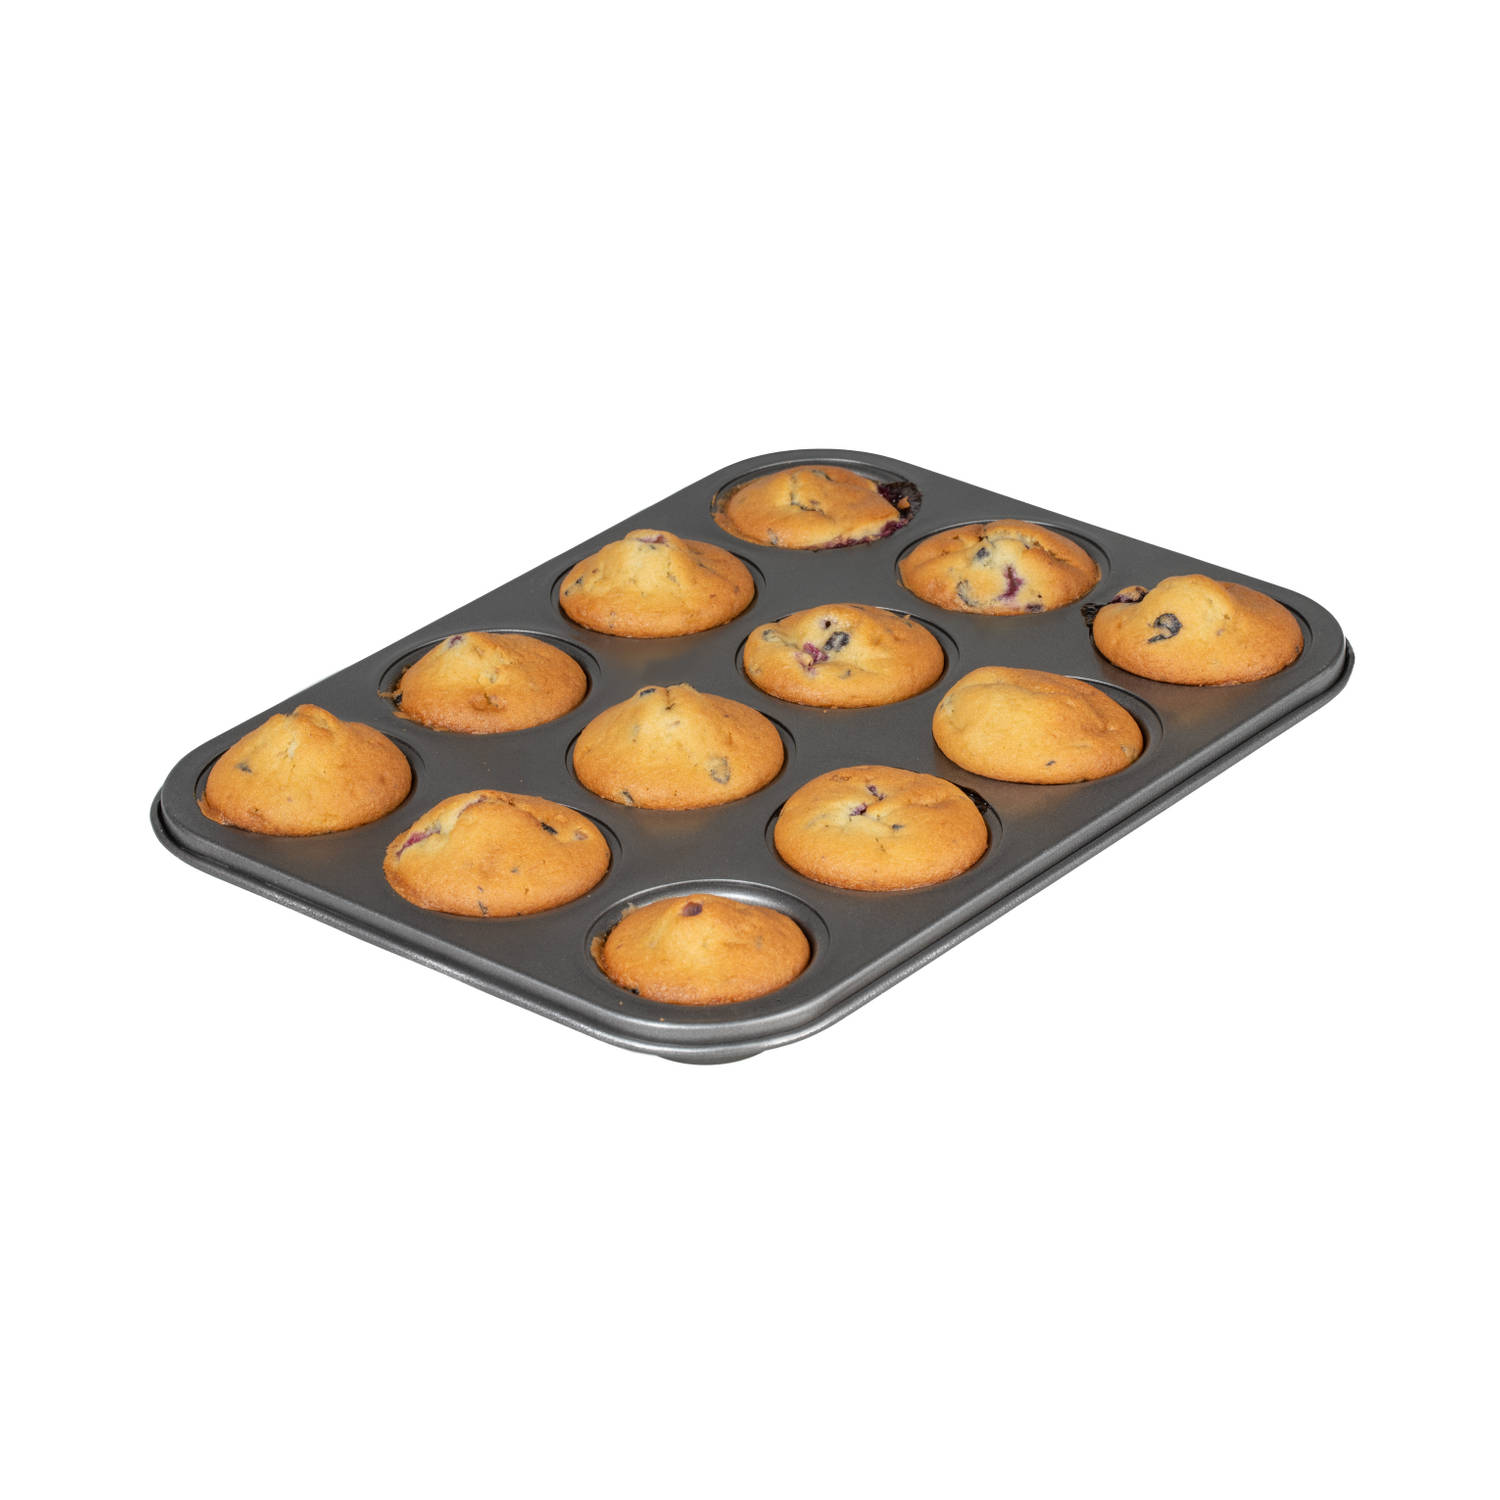 Sareva Muffinvorm Voor 12 Muffins